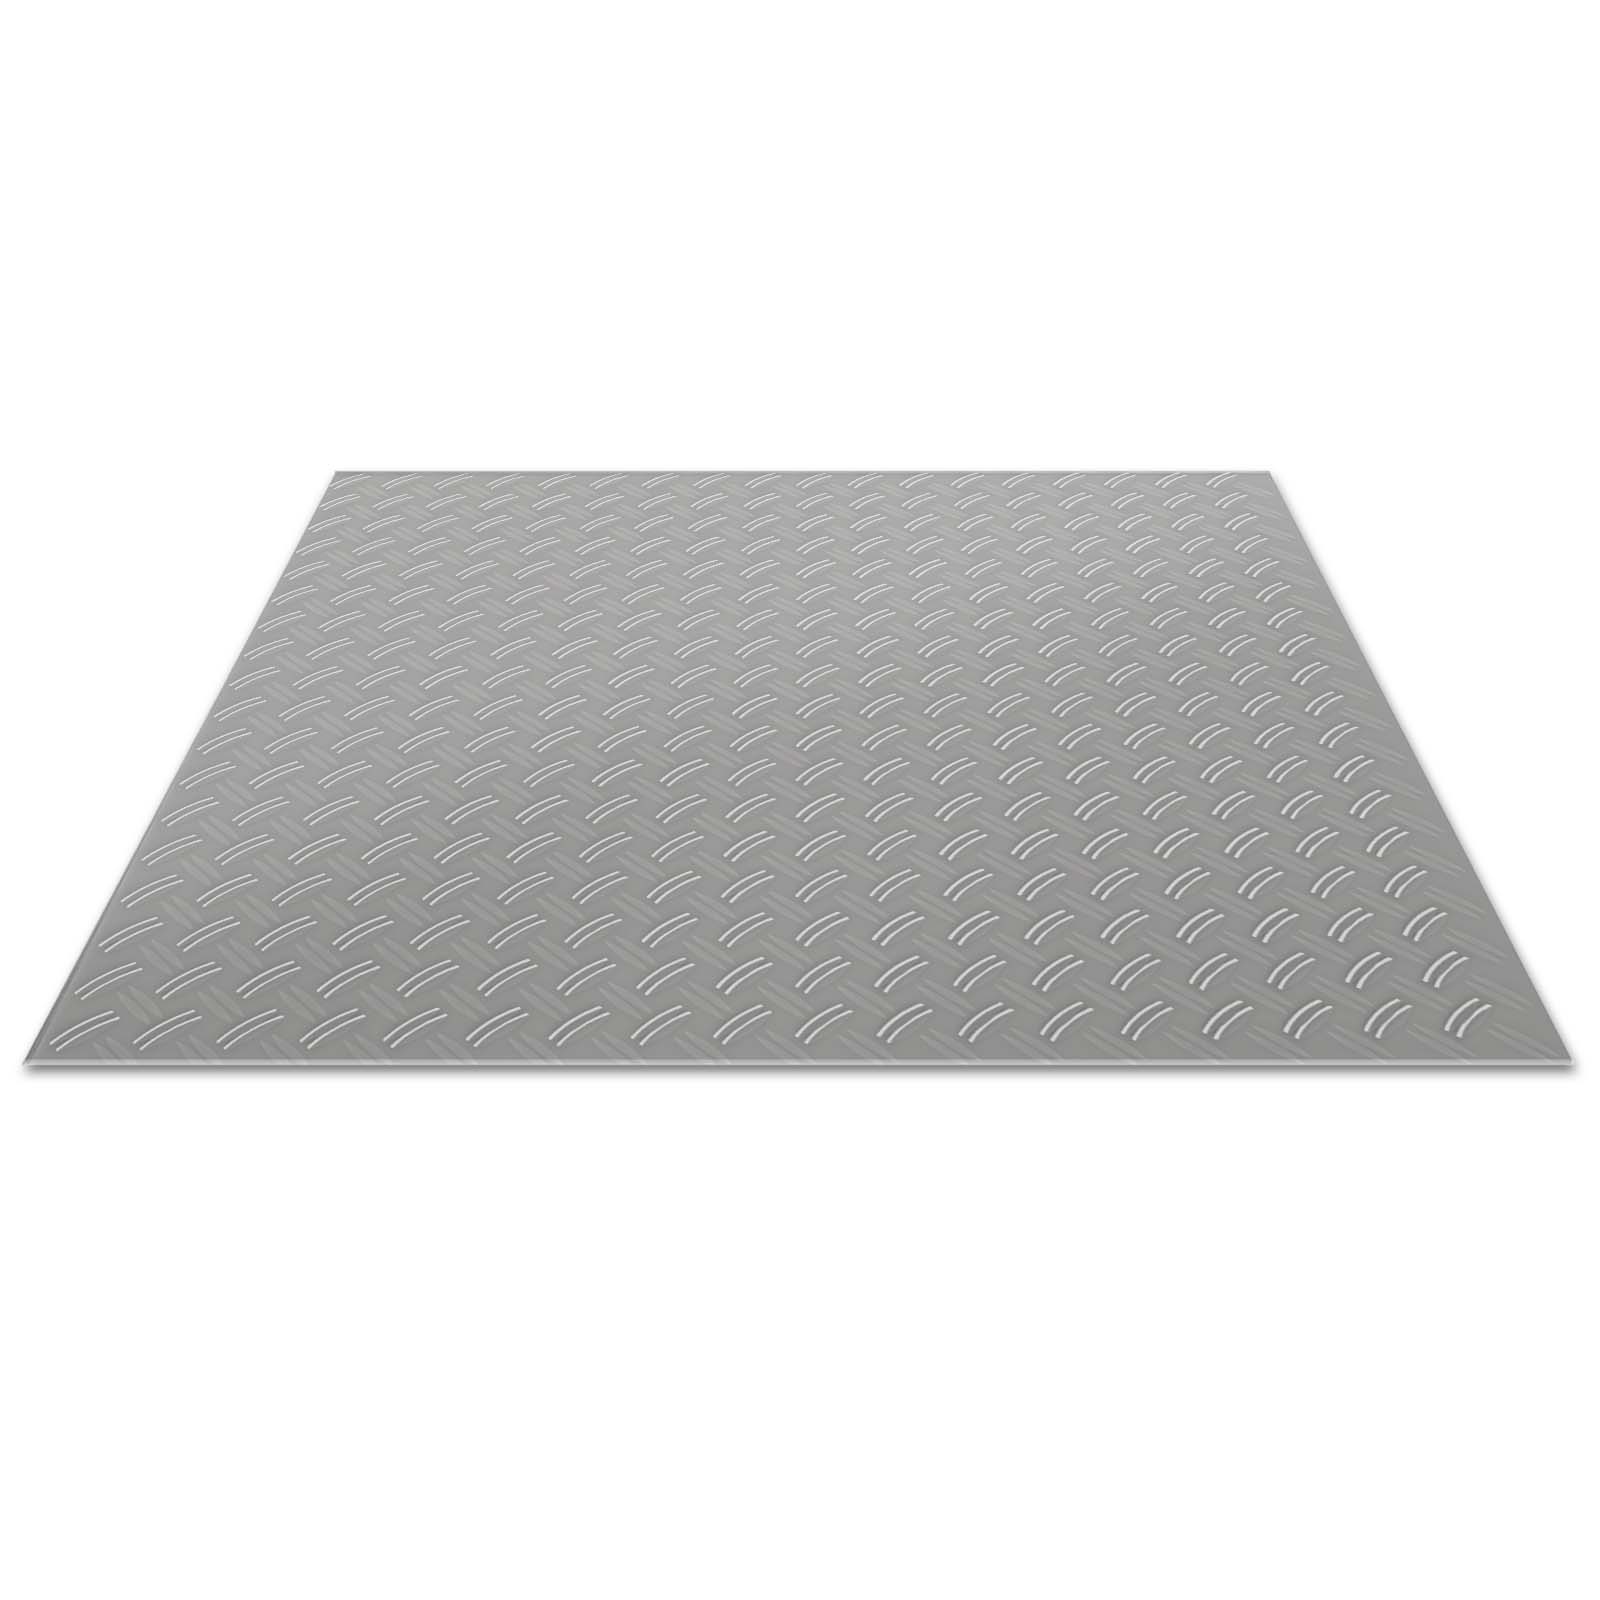 Tafel Alu Riffelblech blank 1,5/2x1000x2000mm, (2 m²/Tafel) (Preis pro Stk.)